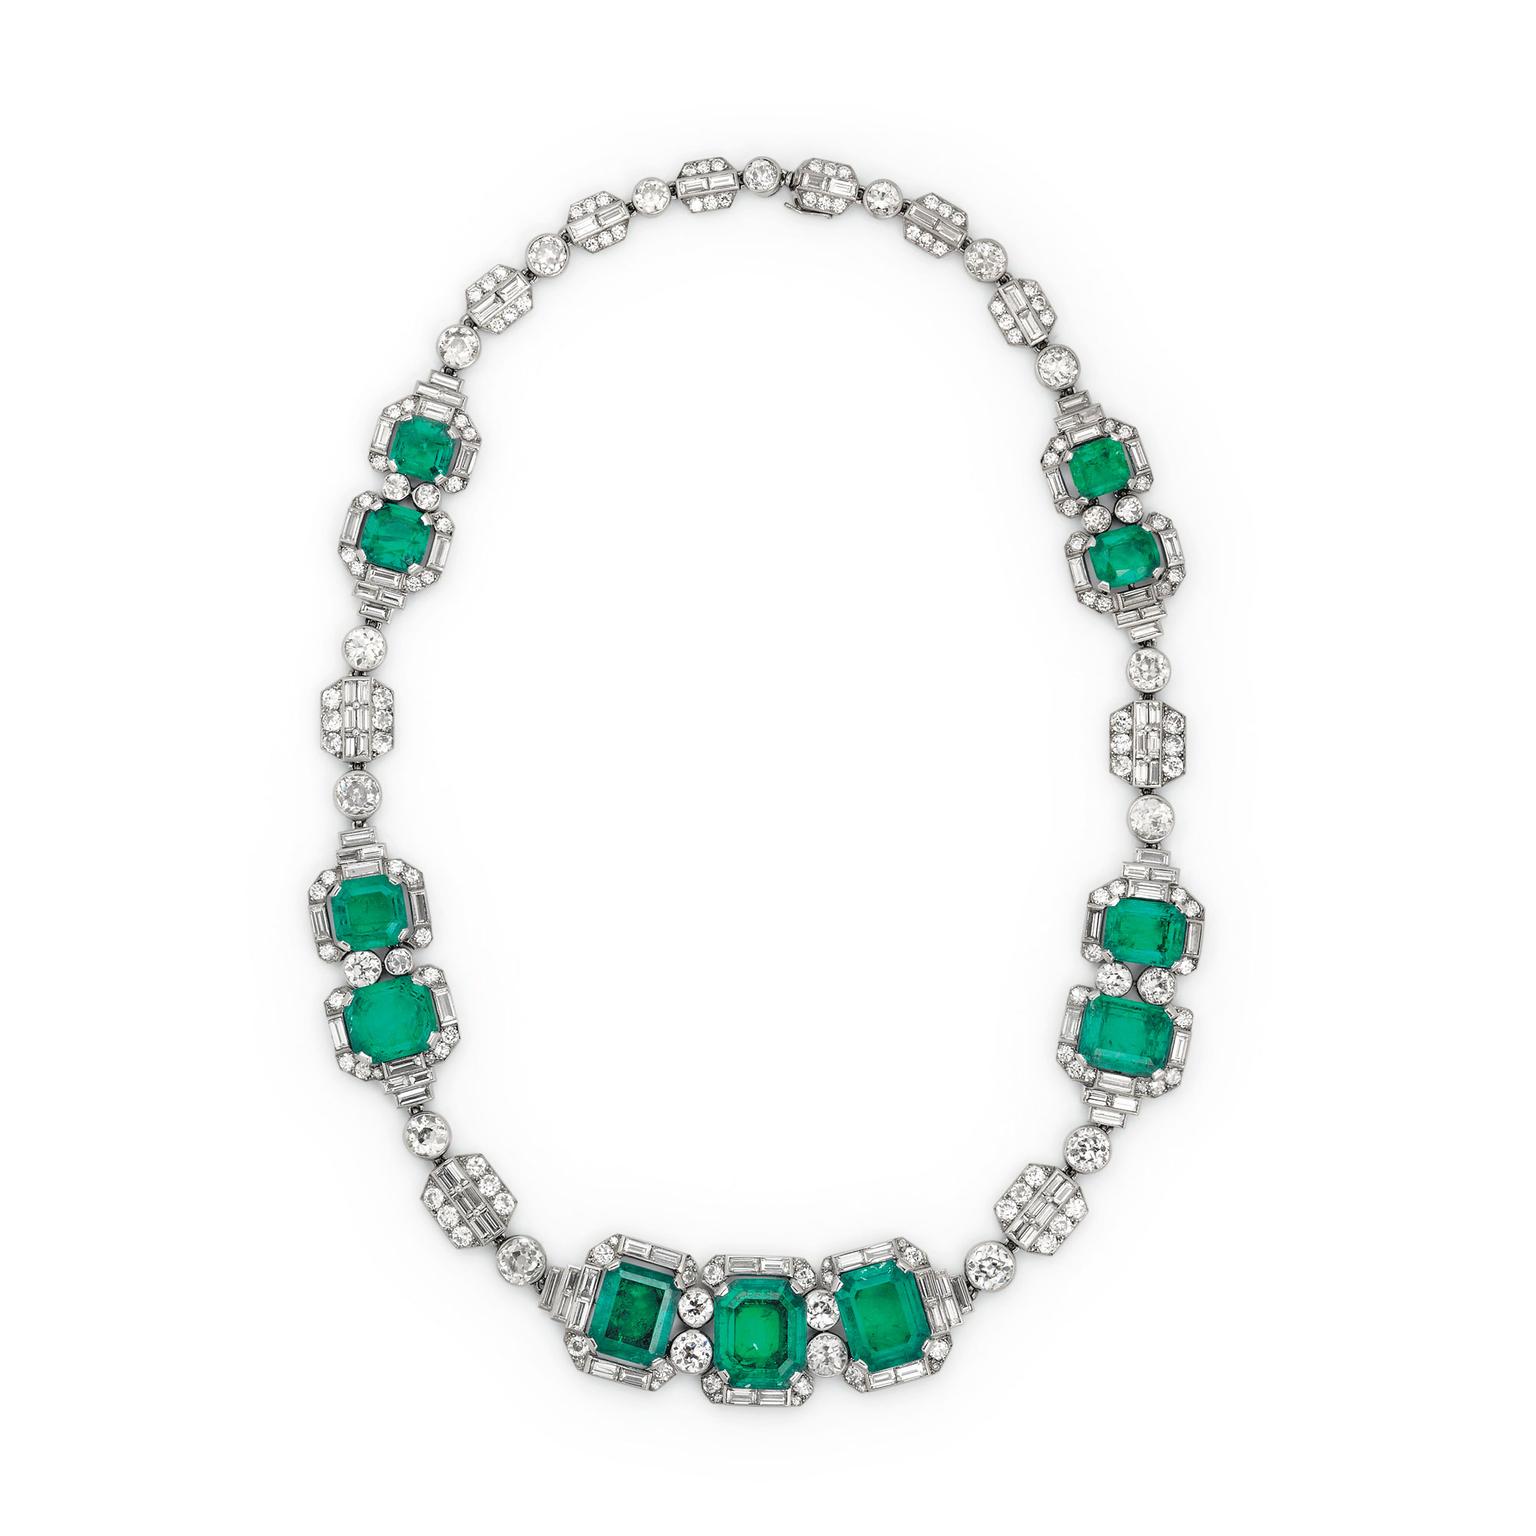 Margaret Thatcher's Art Deco emerald and diamond Chaumet necklace